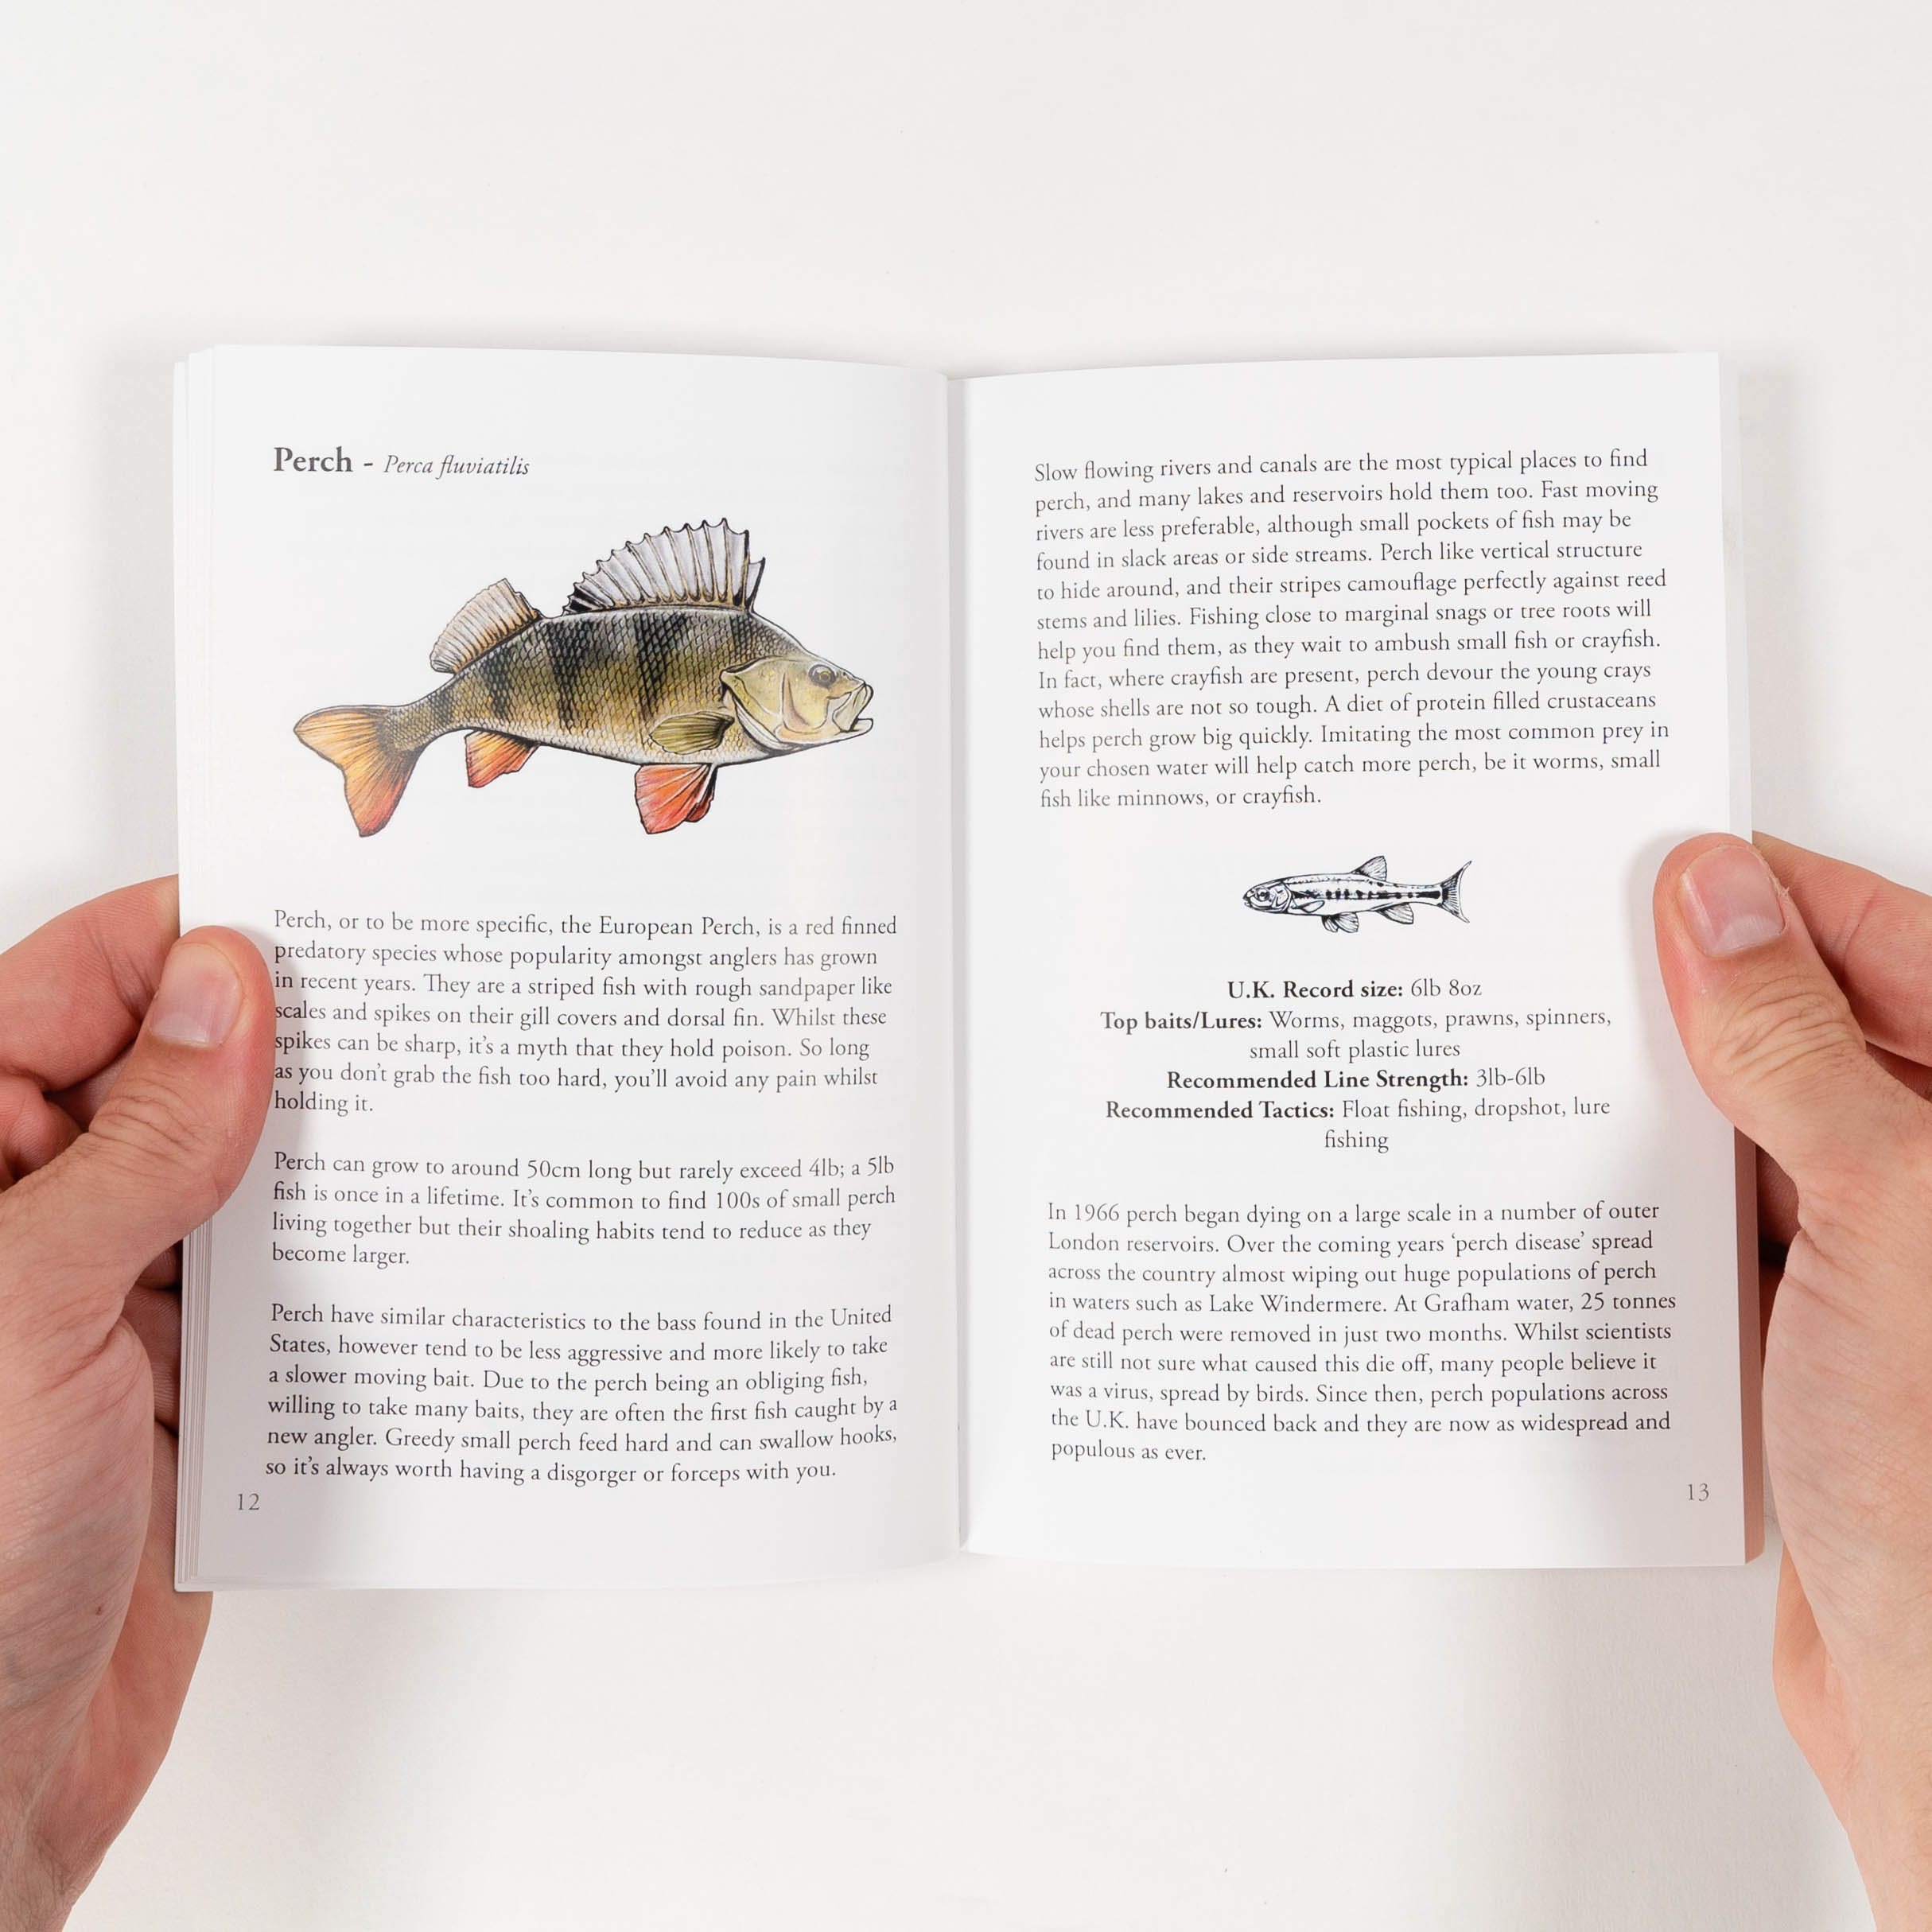 The Simple Fishing Guidebook